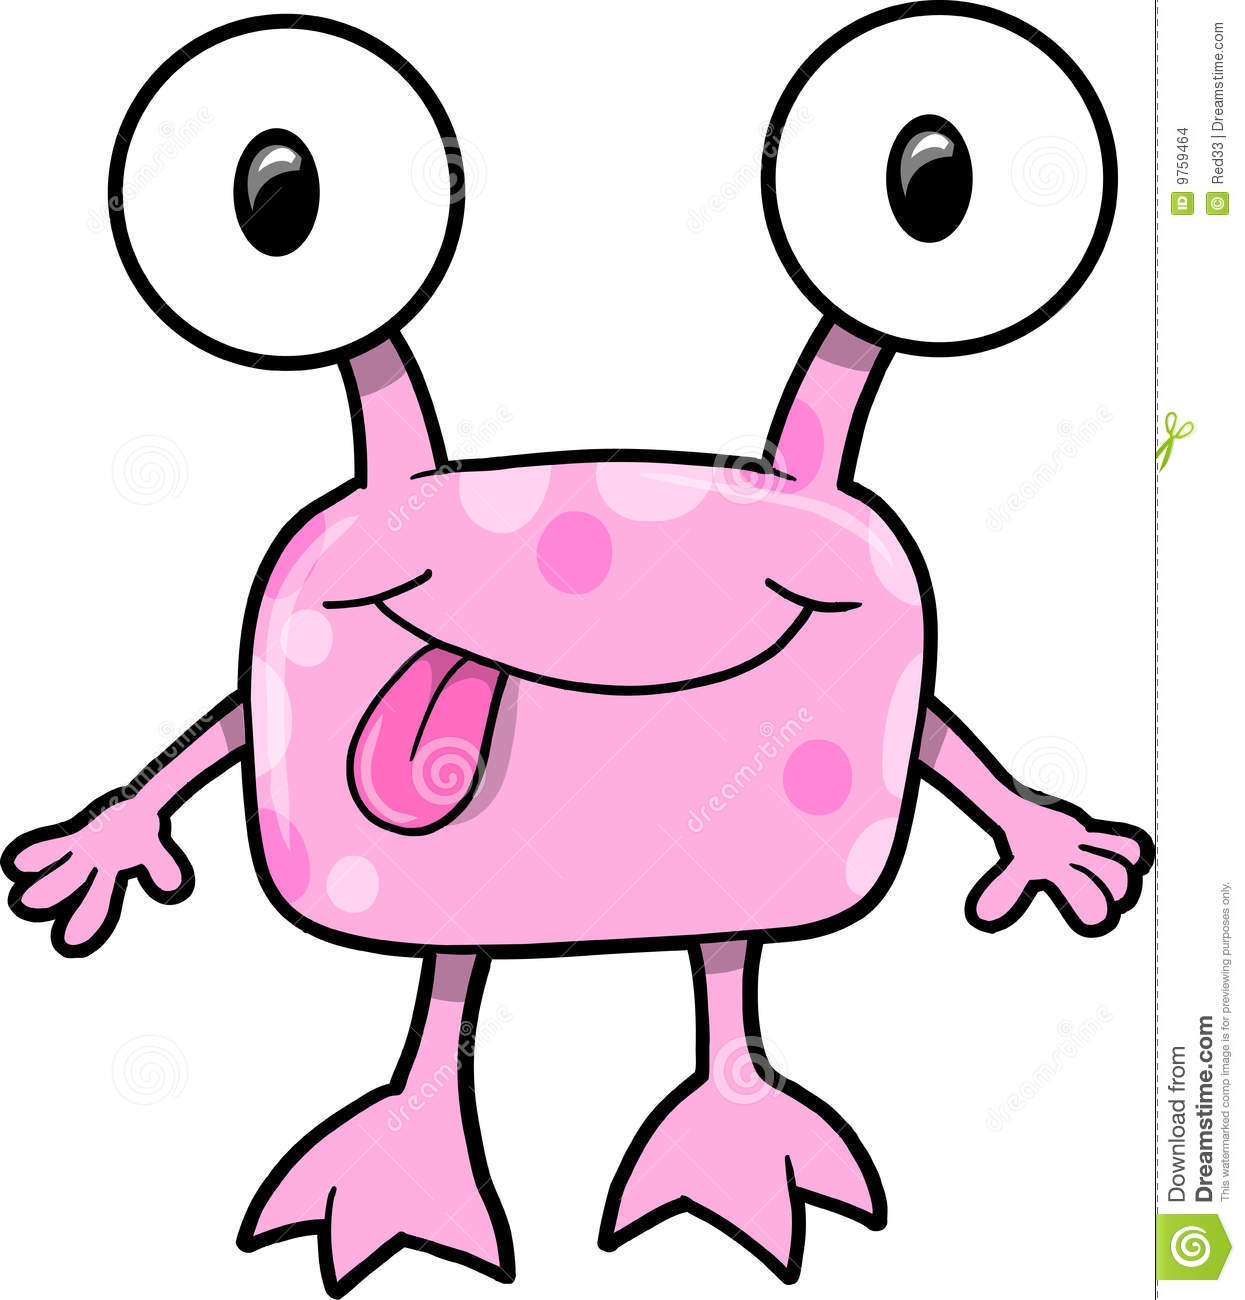 Stock Images  Pink Monster Vector Illustration